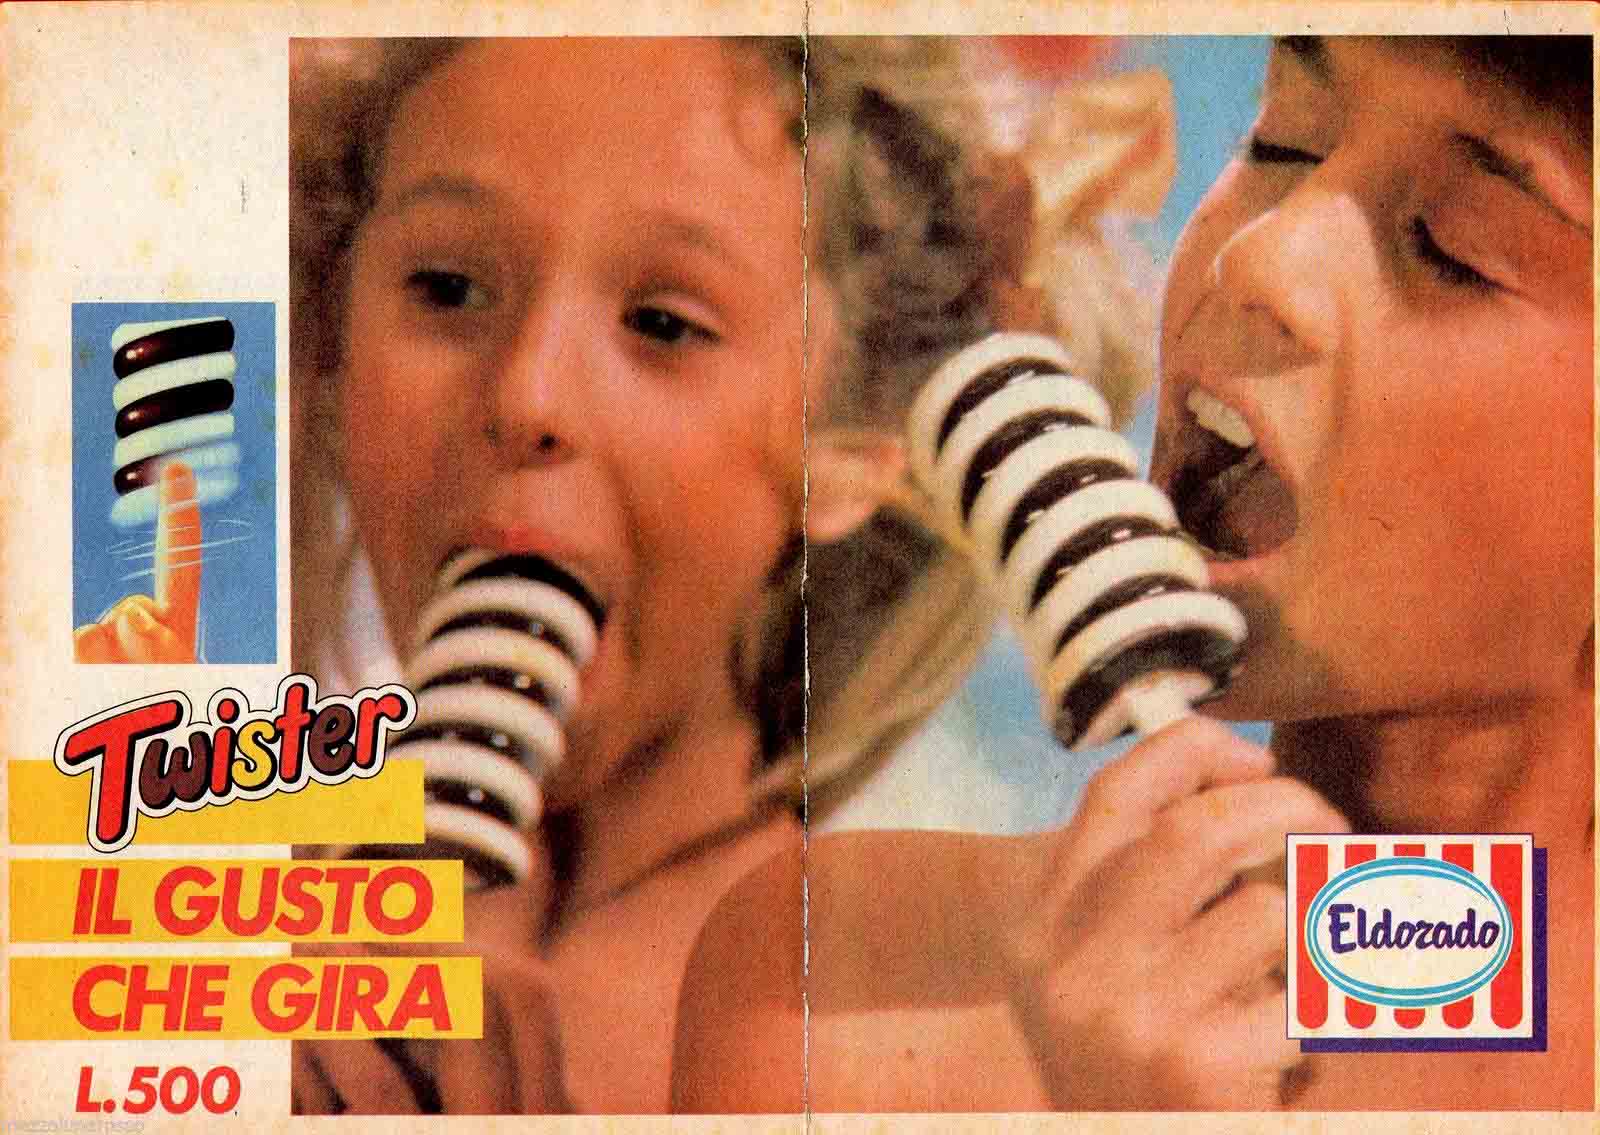 1988 vintage advert popsicle